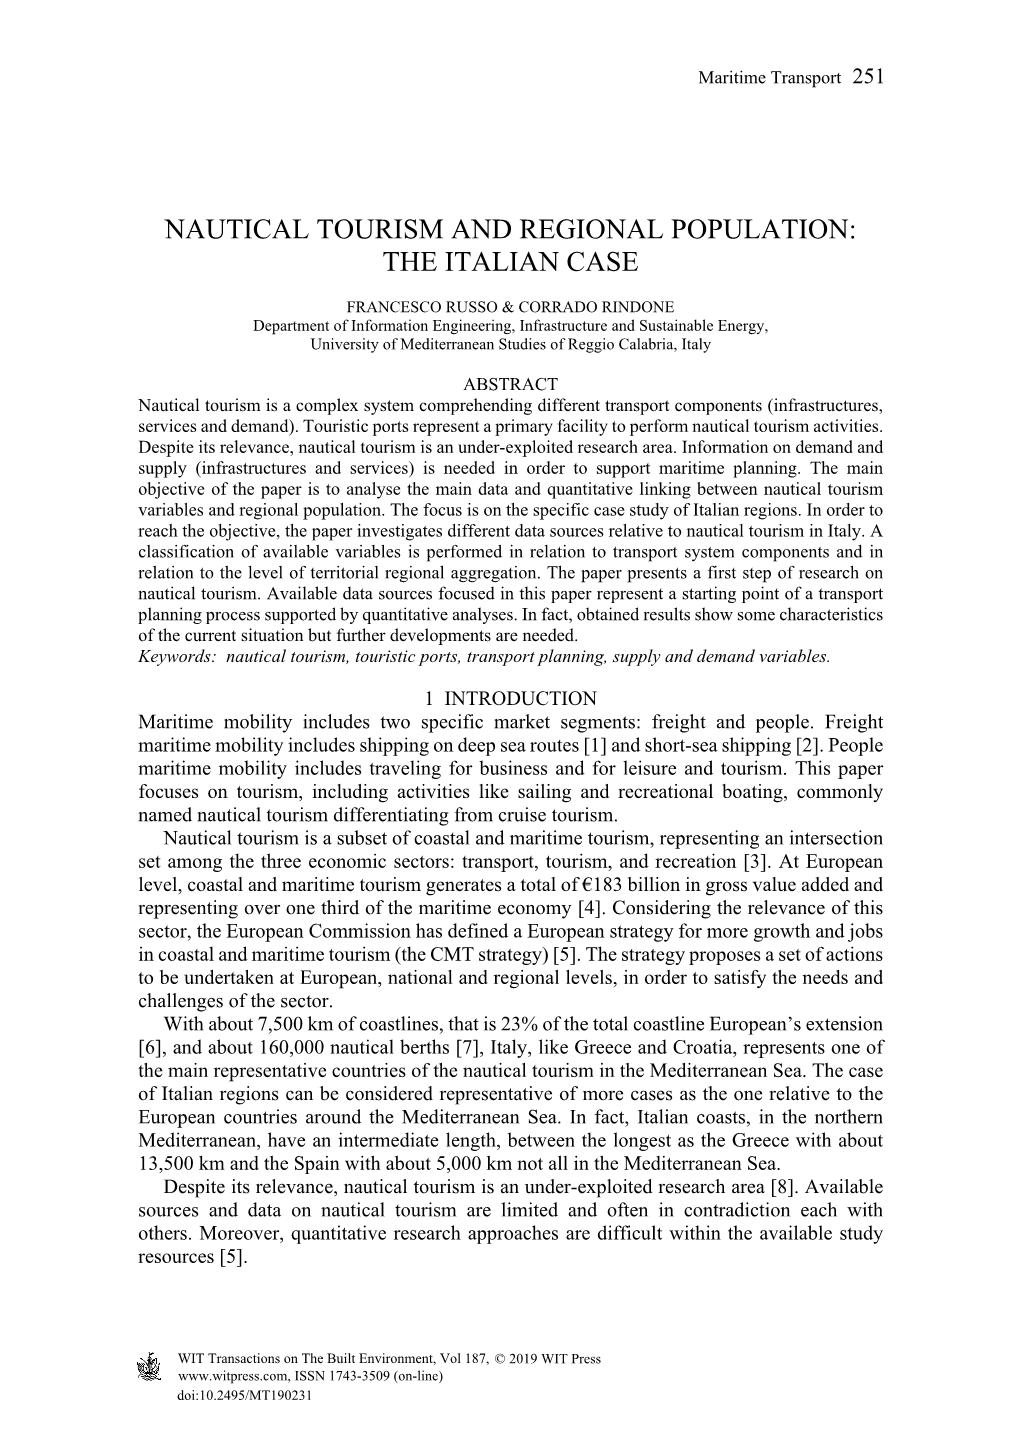 Nautical Tourism and Regional Population: the Italian Case